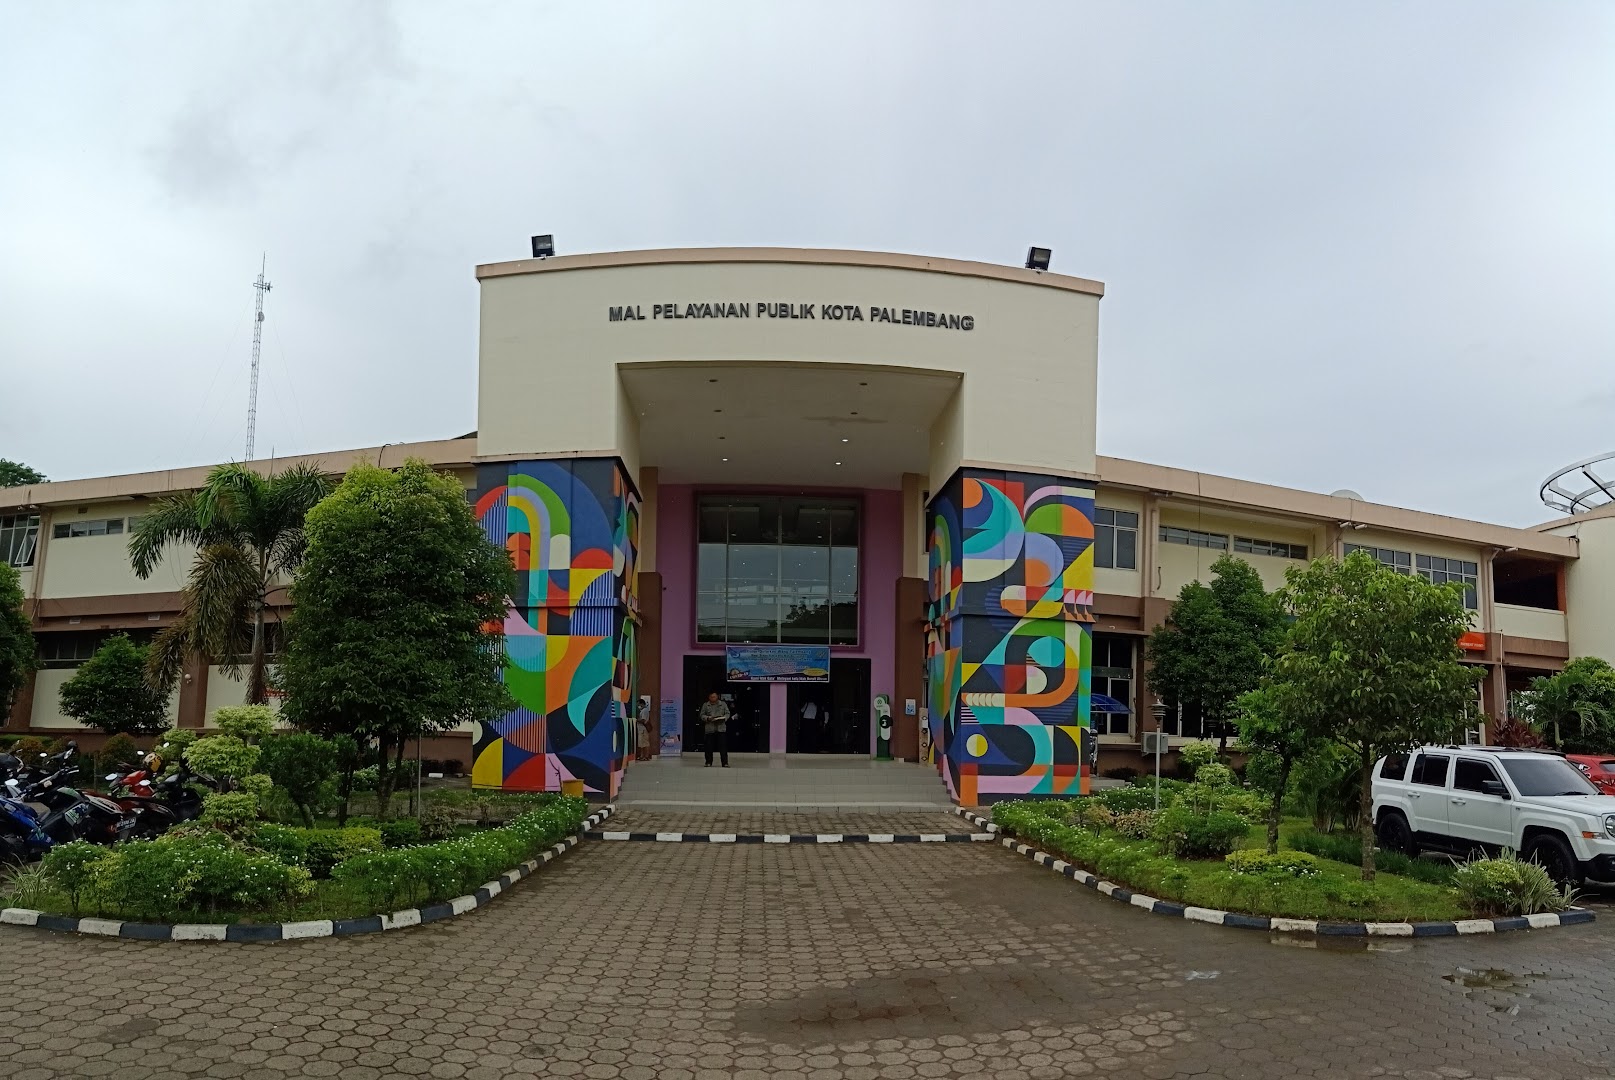 Mall Pelayanan Publik Kota Palembang Photo